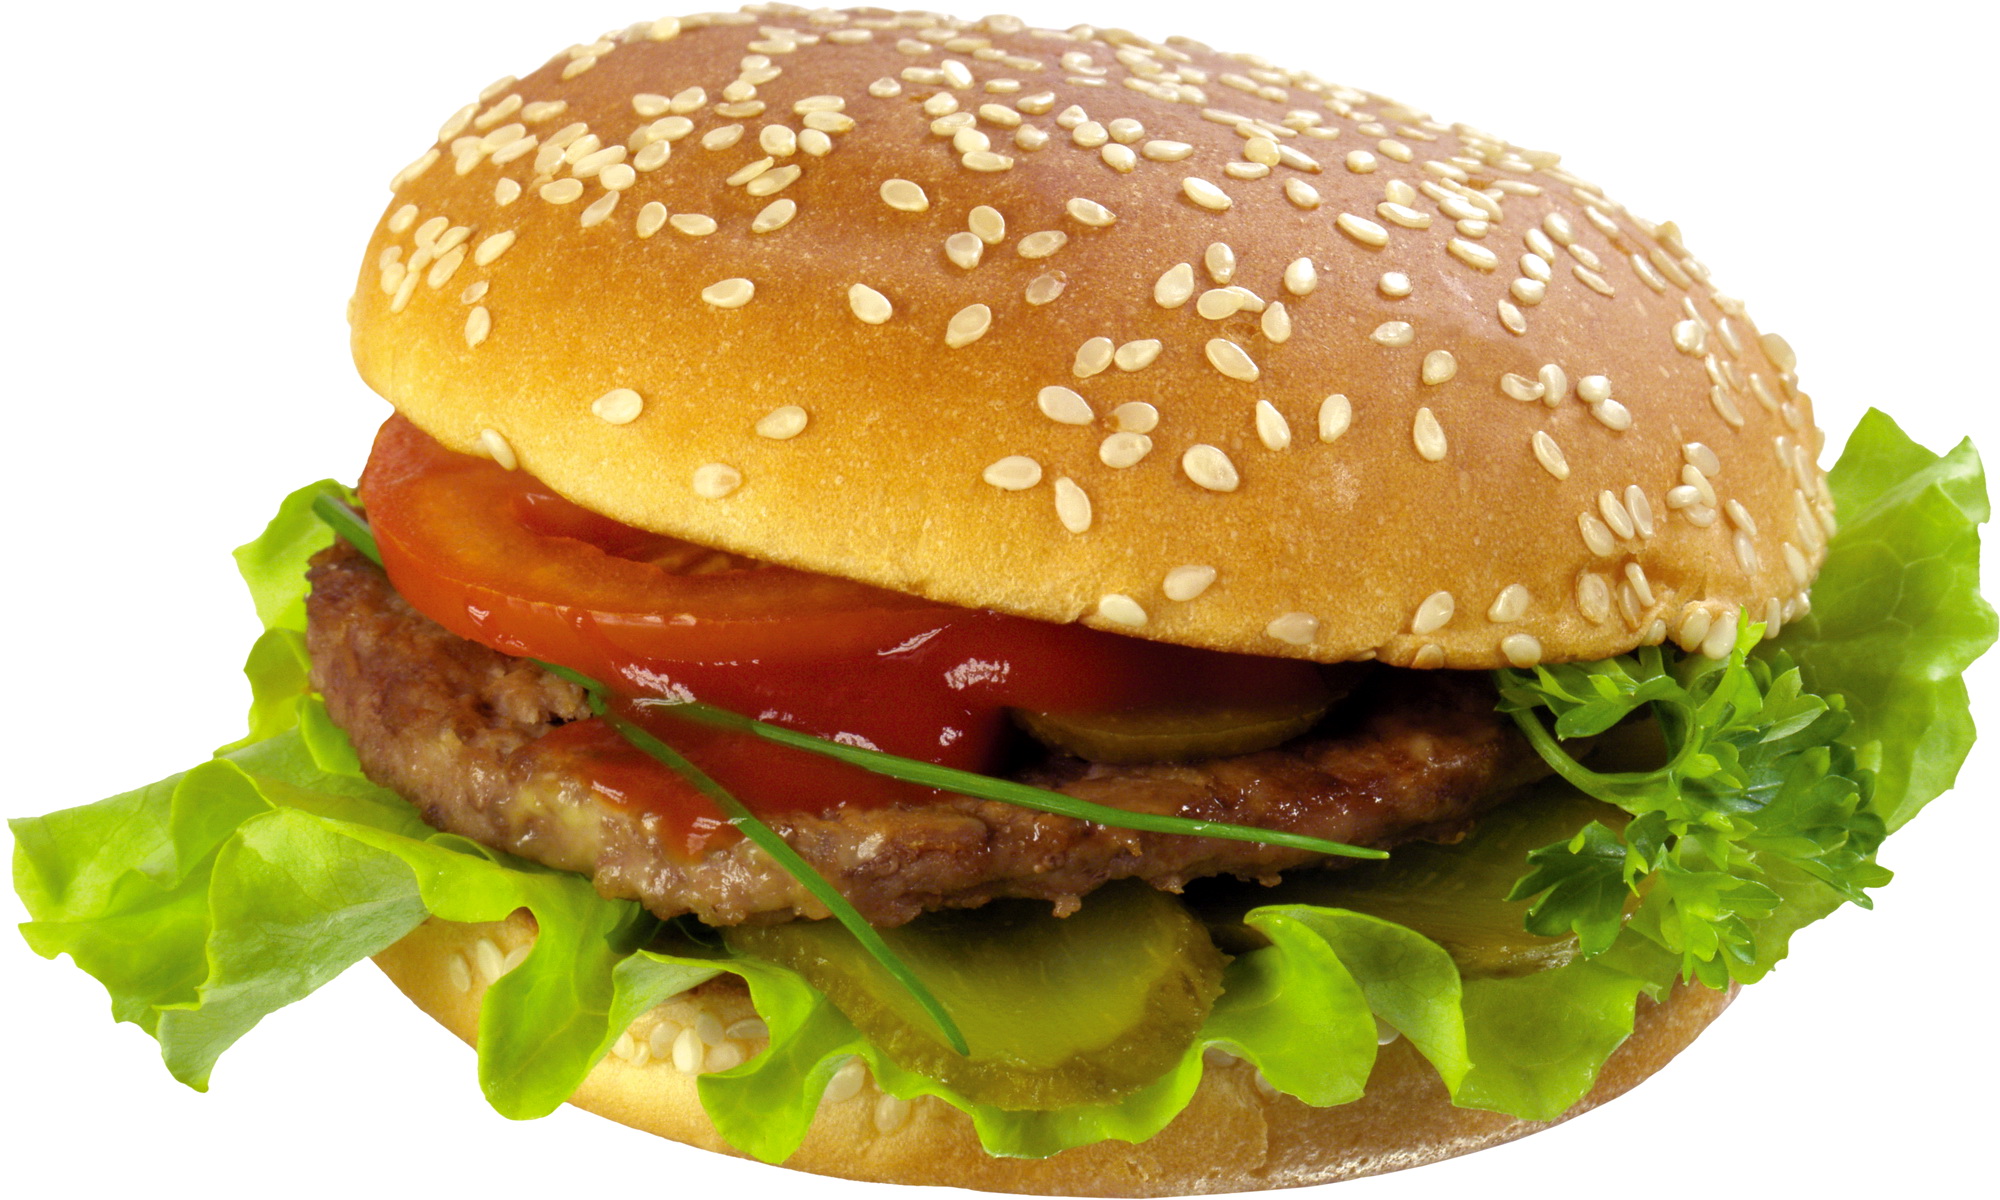 Food Burger Wallpaper